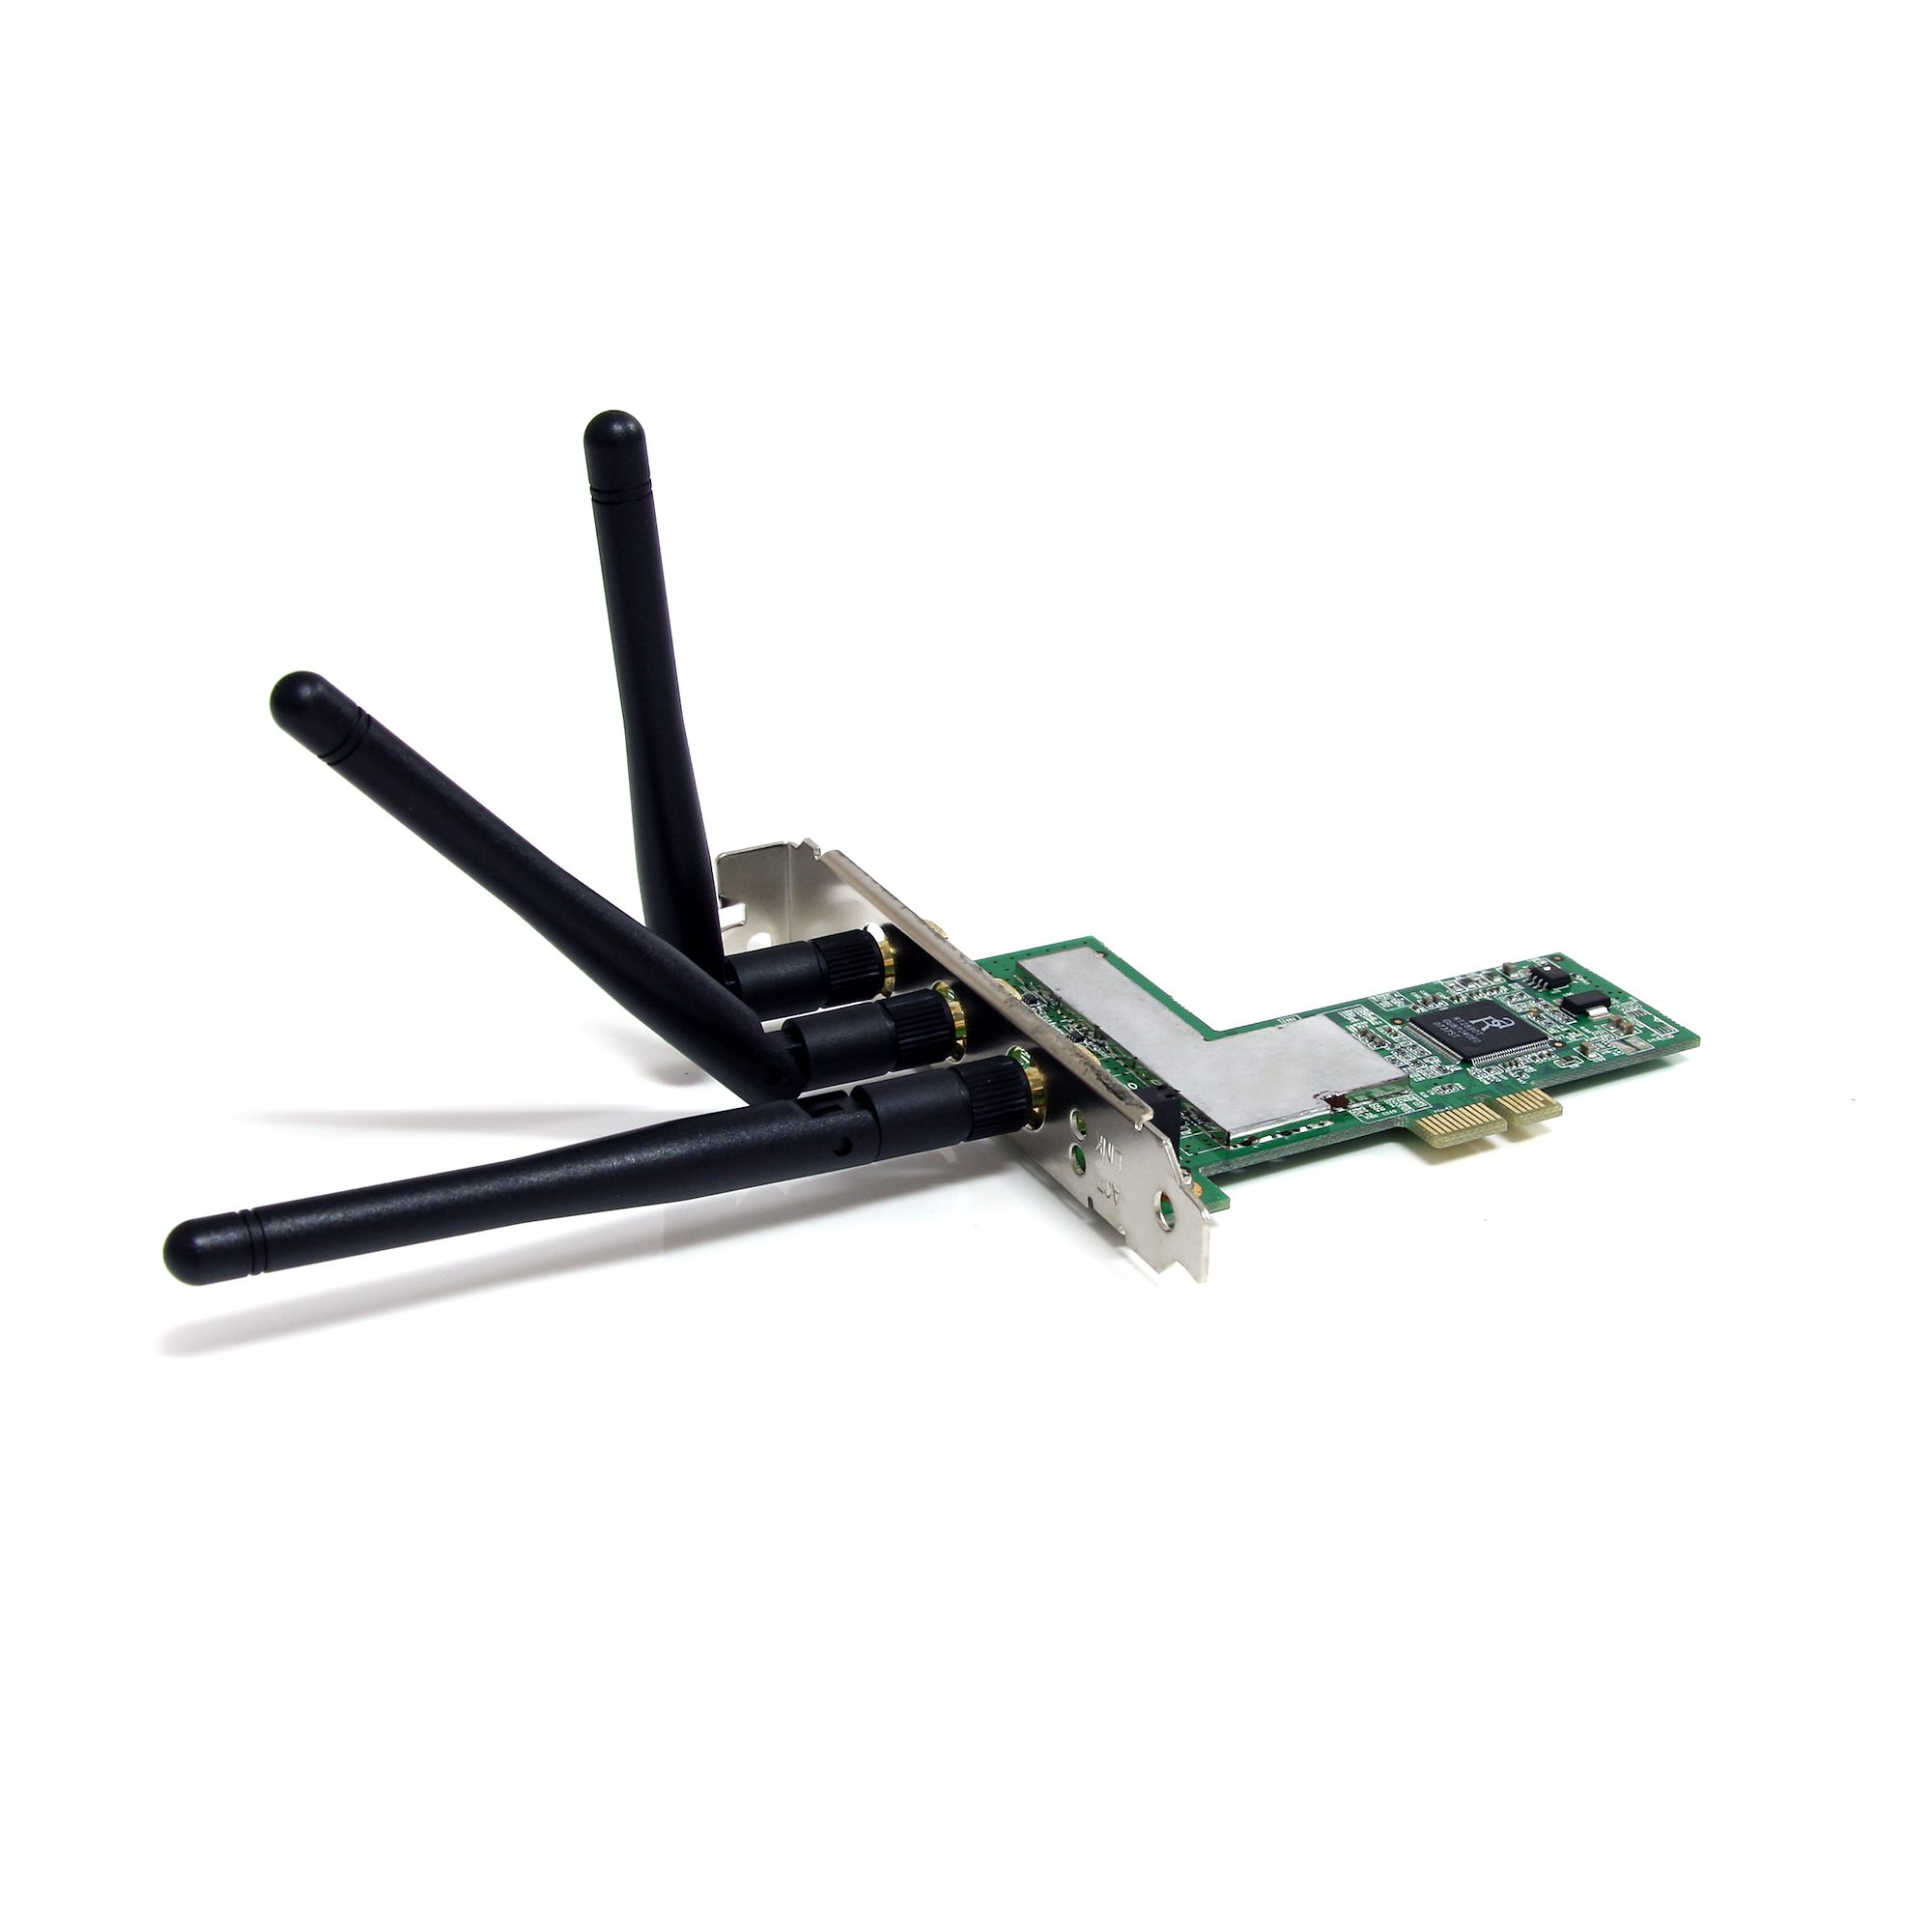 Ralink 802.11. 802.11N USB Wireless lan Card. Ralink 802.11n USB Wireless lan Card. PCIE lan 802.11n. 300mbps Wireless 802.11n PCI Adapter.